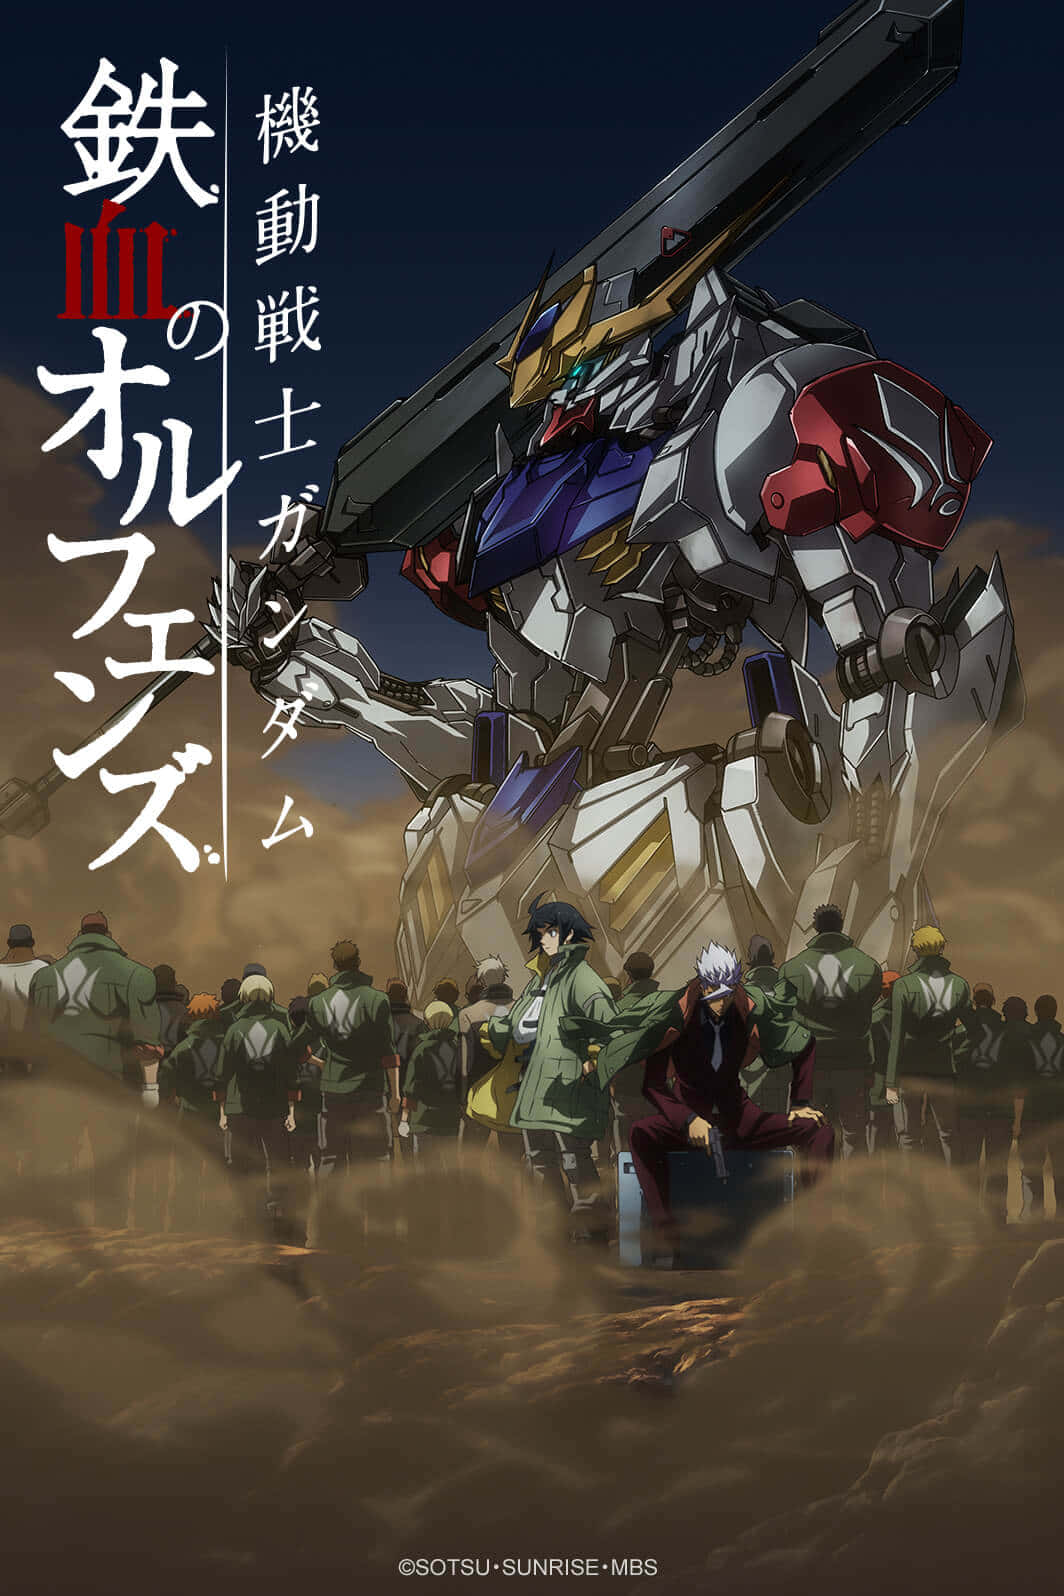 Imagende Mobile Suit Gundam Iron-blooded Orphans Fondo de pantalla